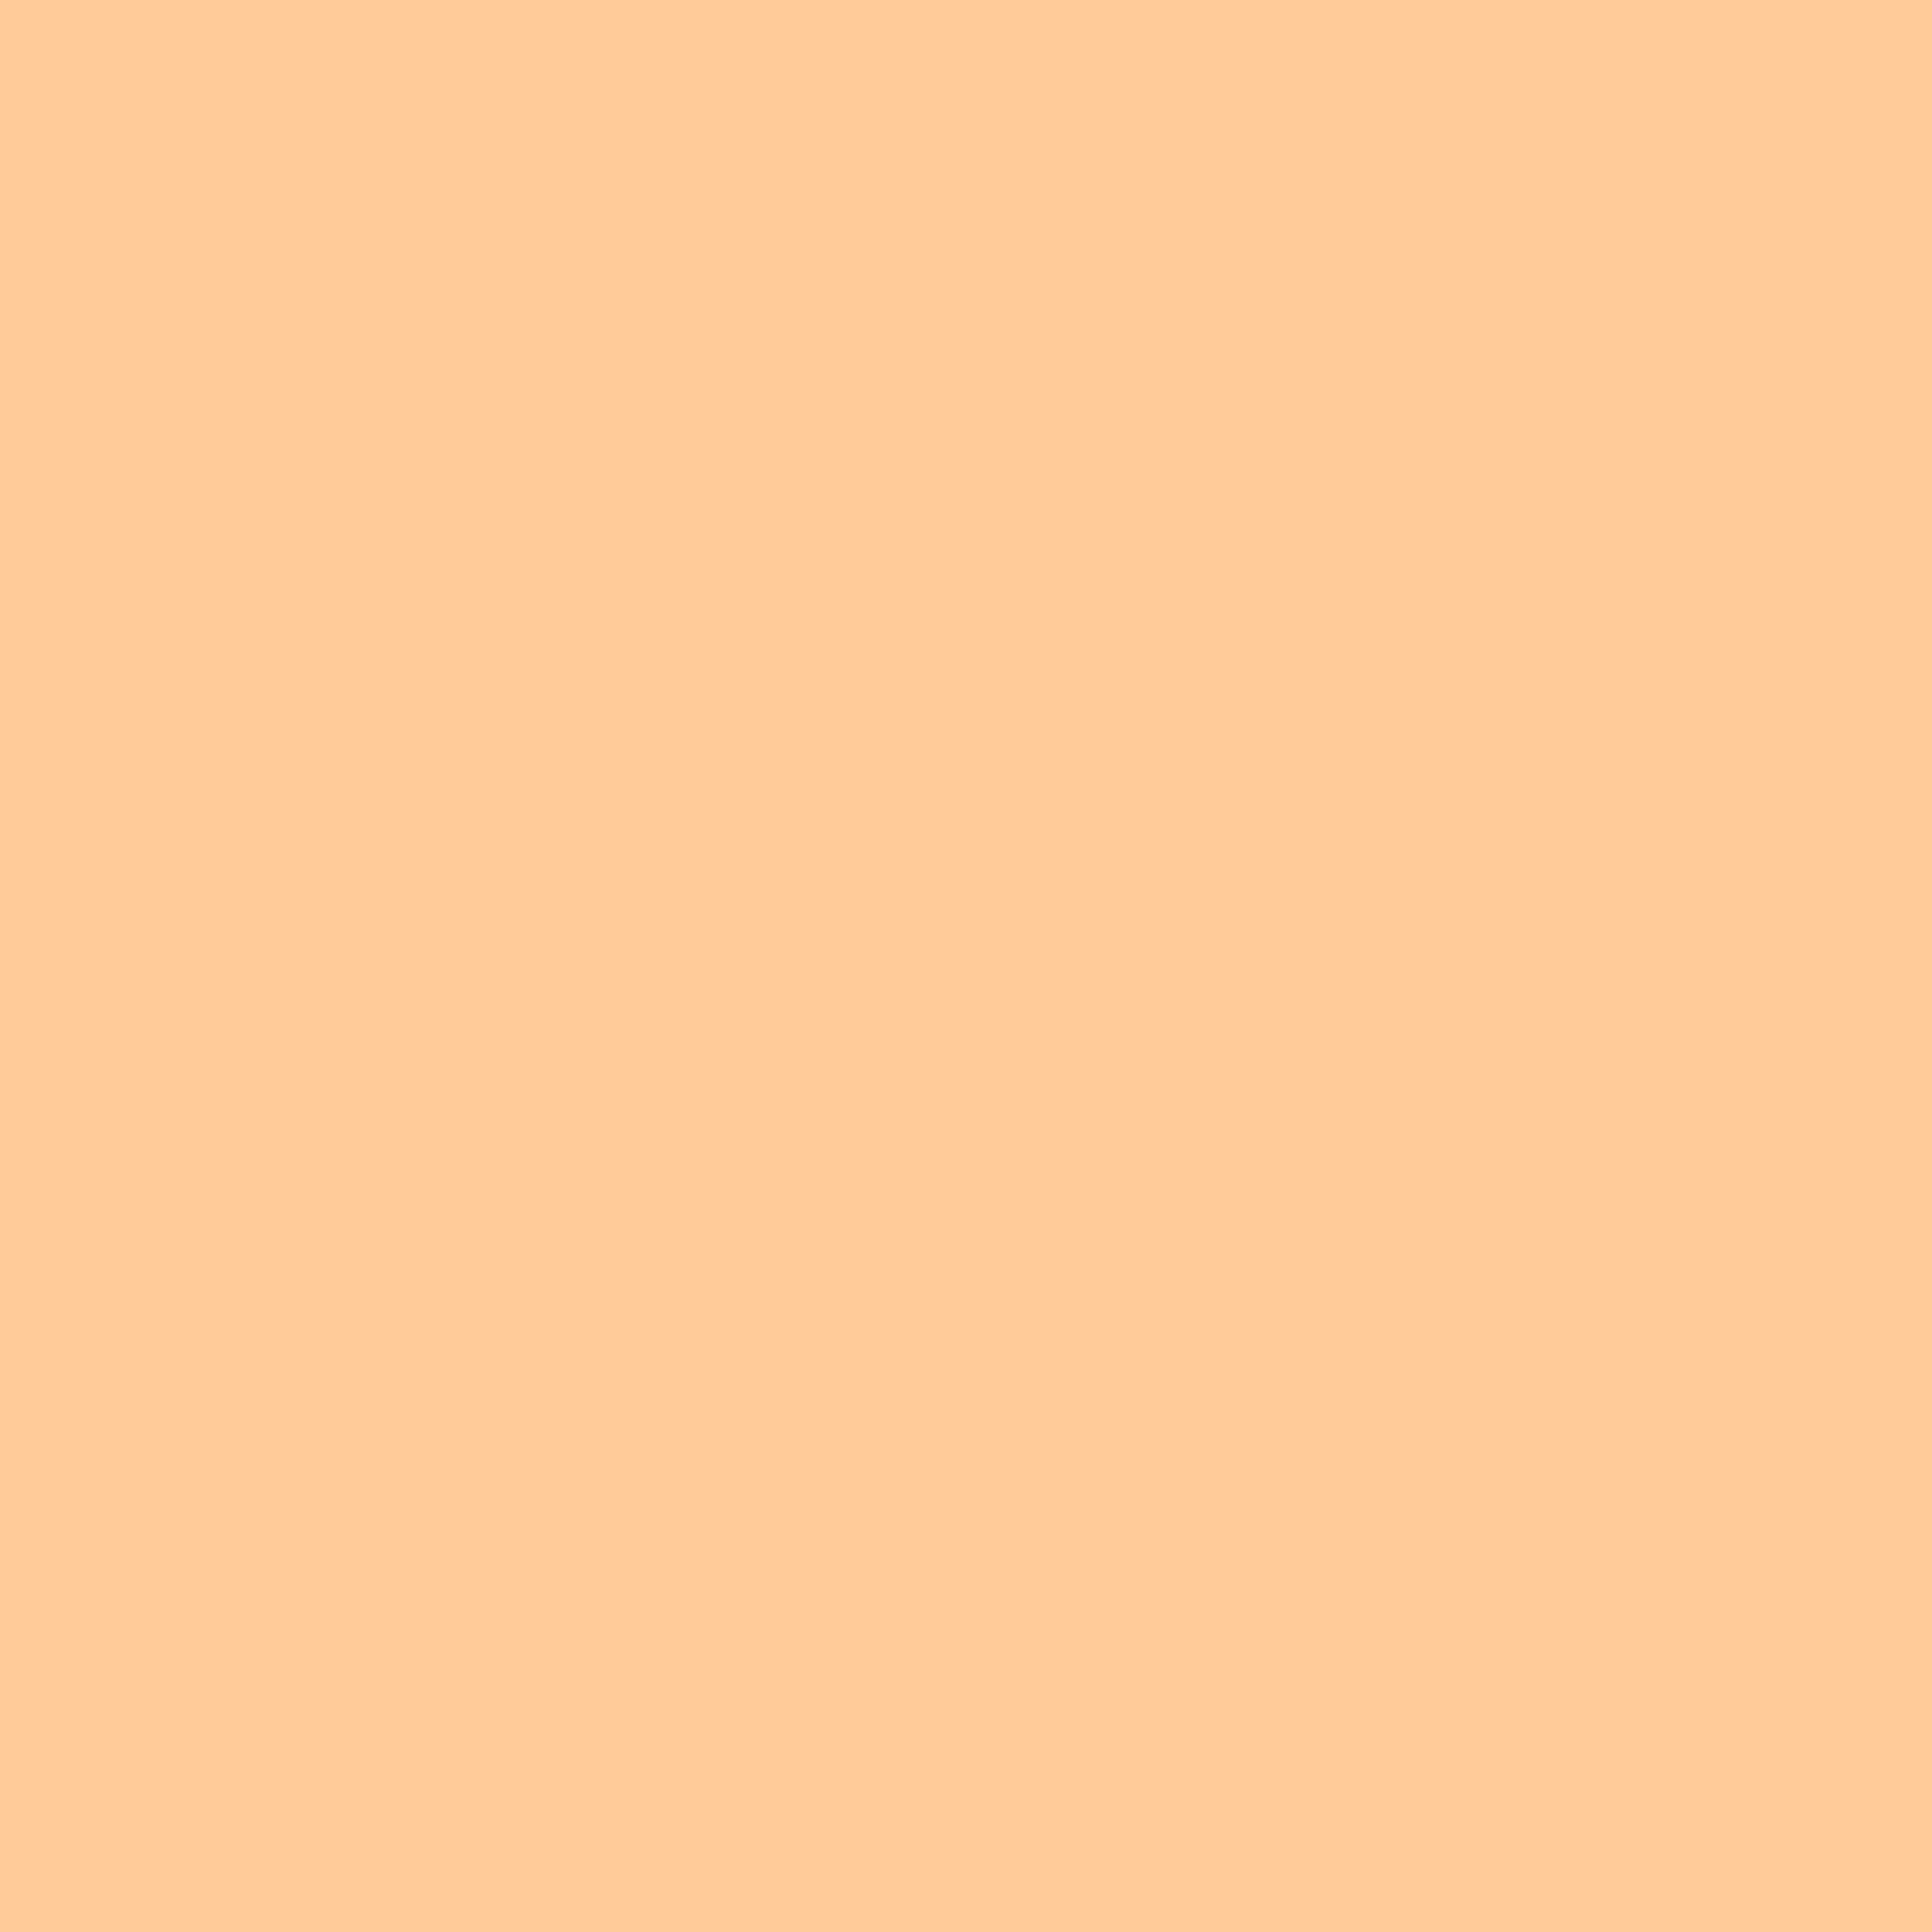 2732x2732 Peach-orange Solid Color Background